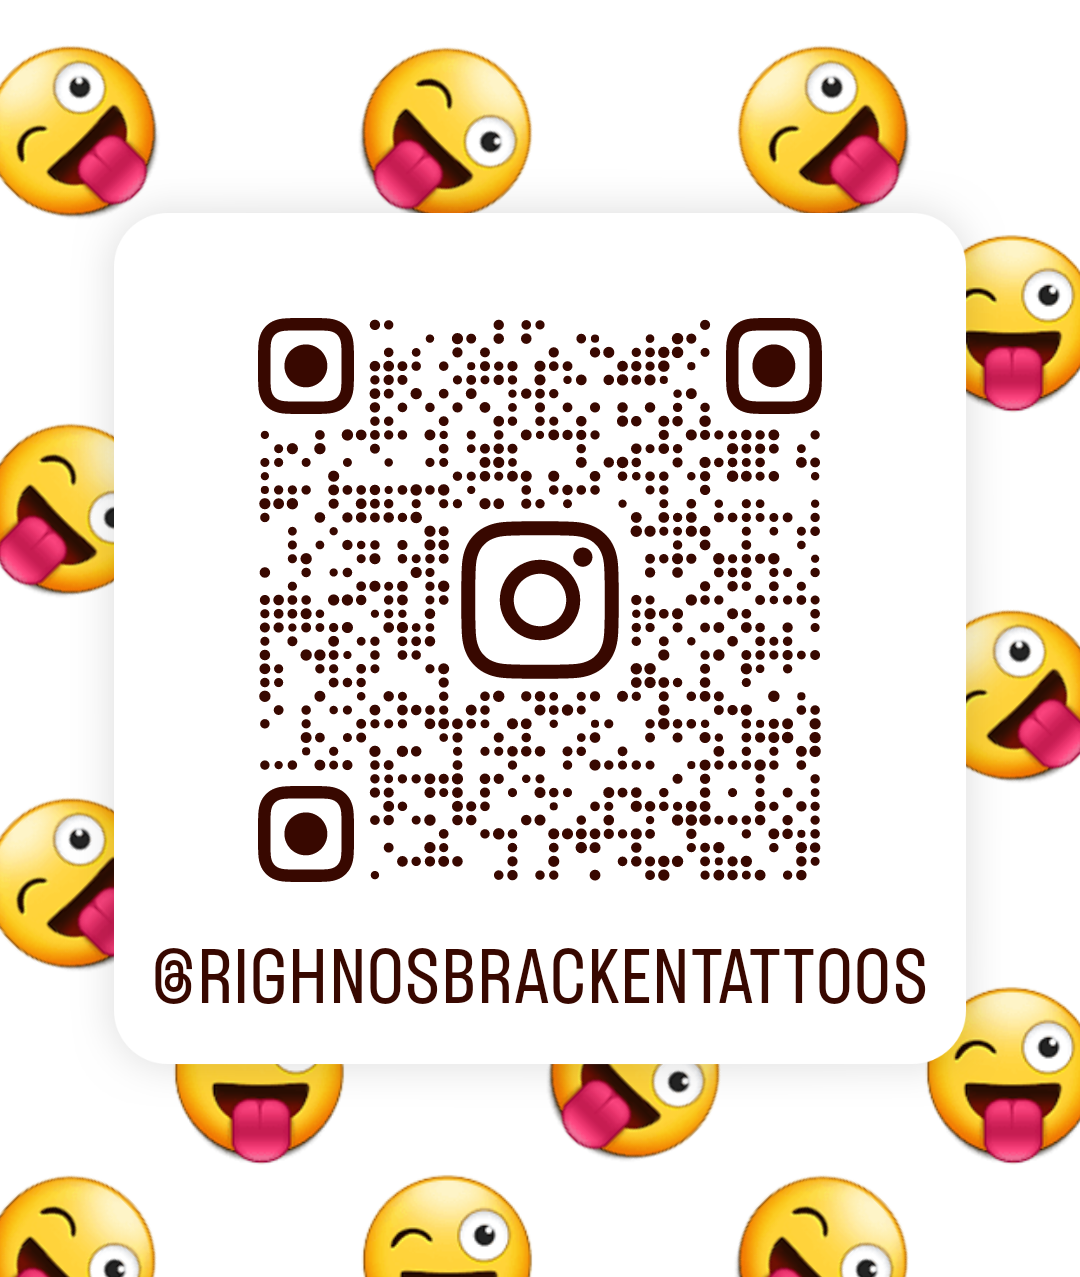 Righno's Bracken Tattoos